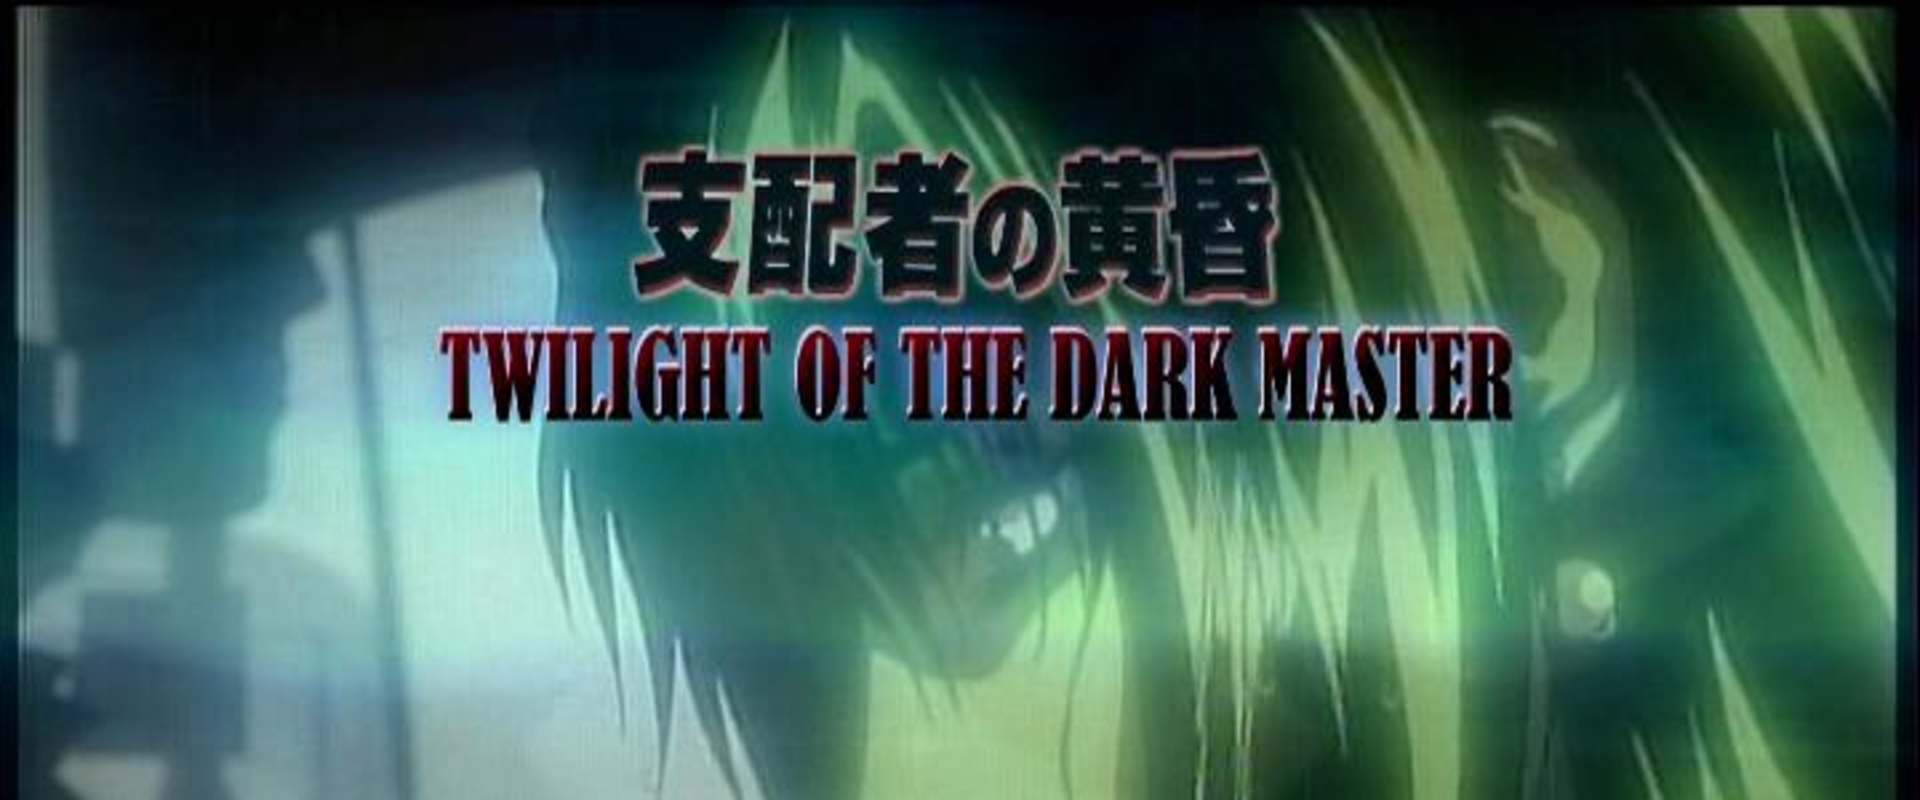 Twilight of the Dark Master background 2